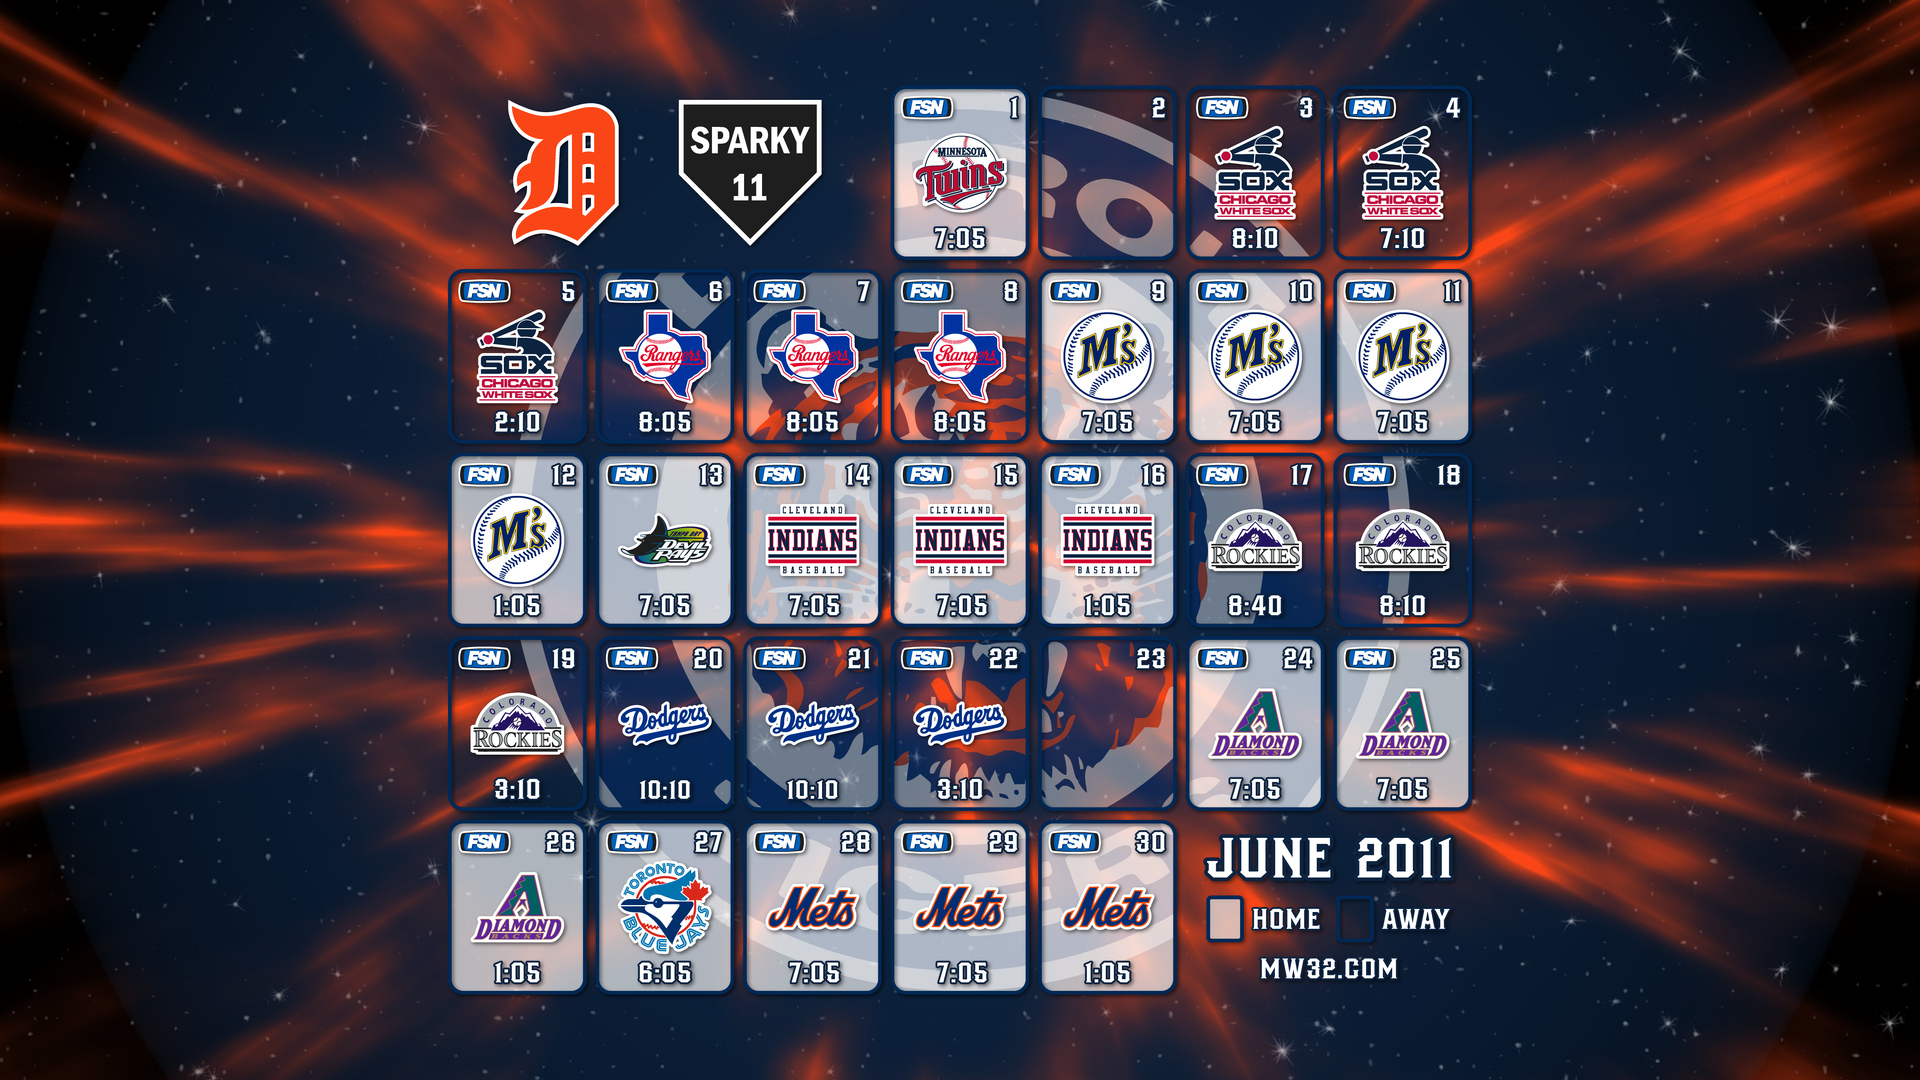 Detroit Tigers Wallpaper Schedule